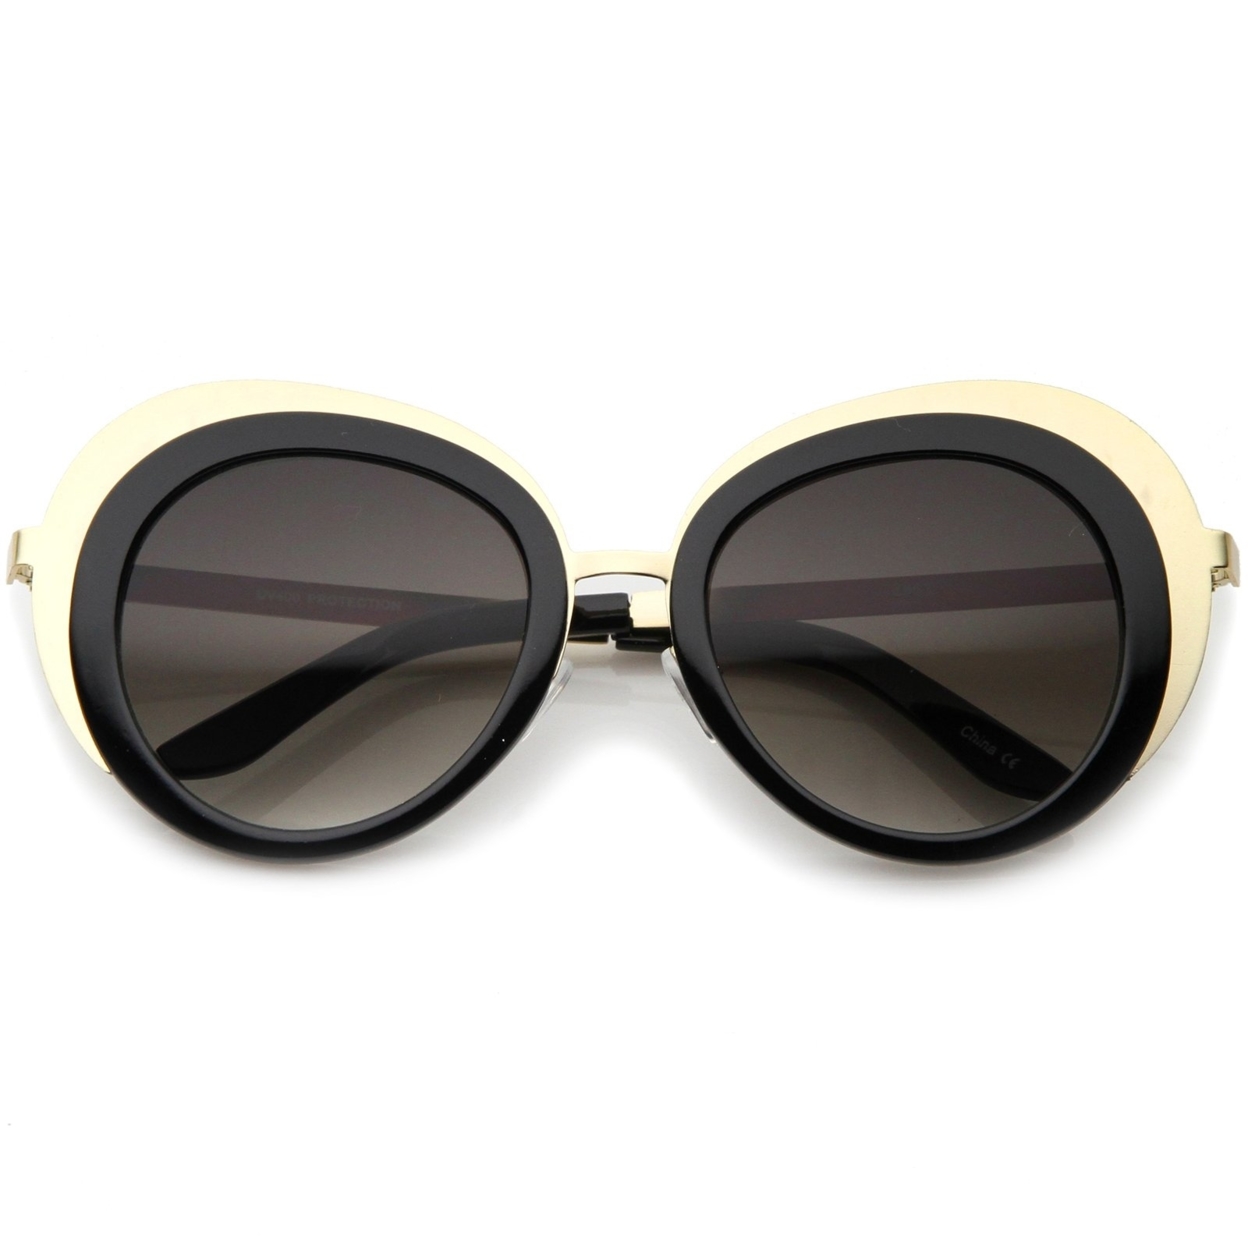 Women's Oversize Two-Tone Metal Frame Border Round Sunglasses 50mm - Gold-Black / Lavender